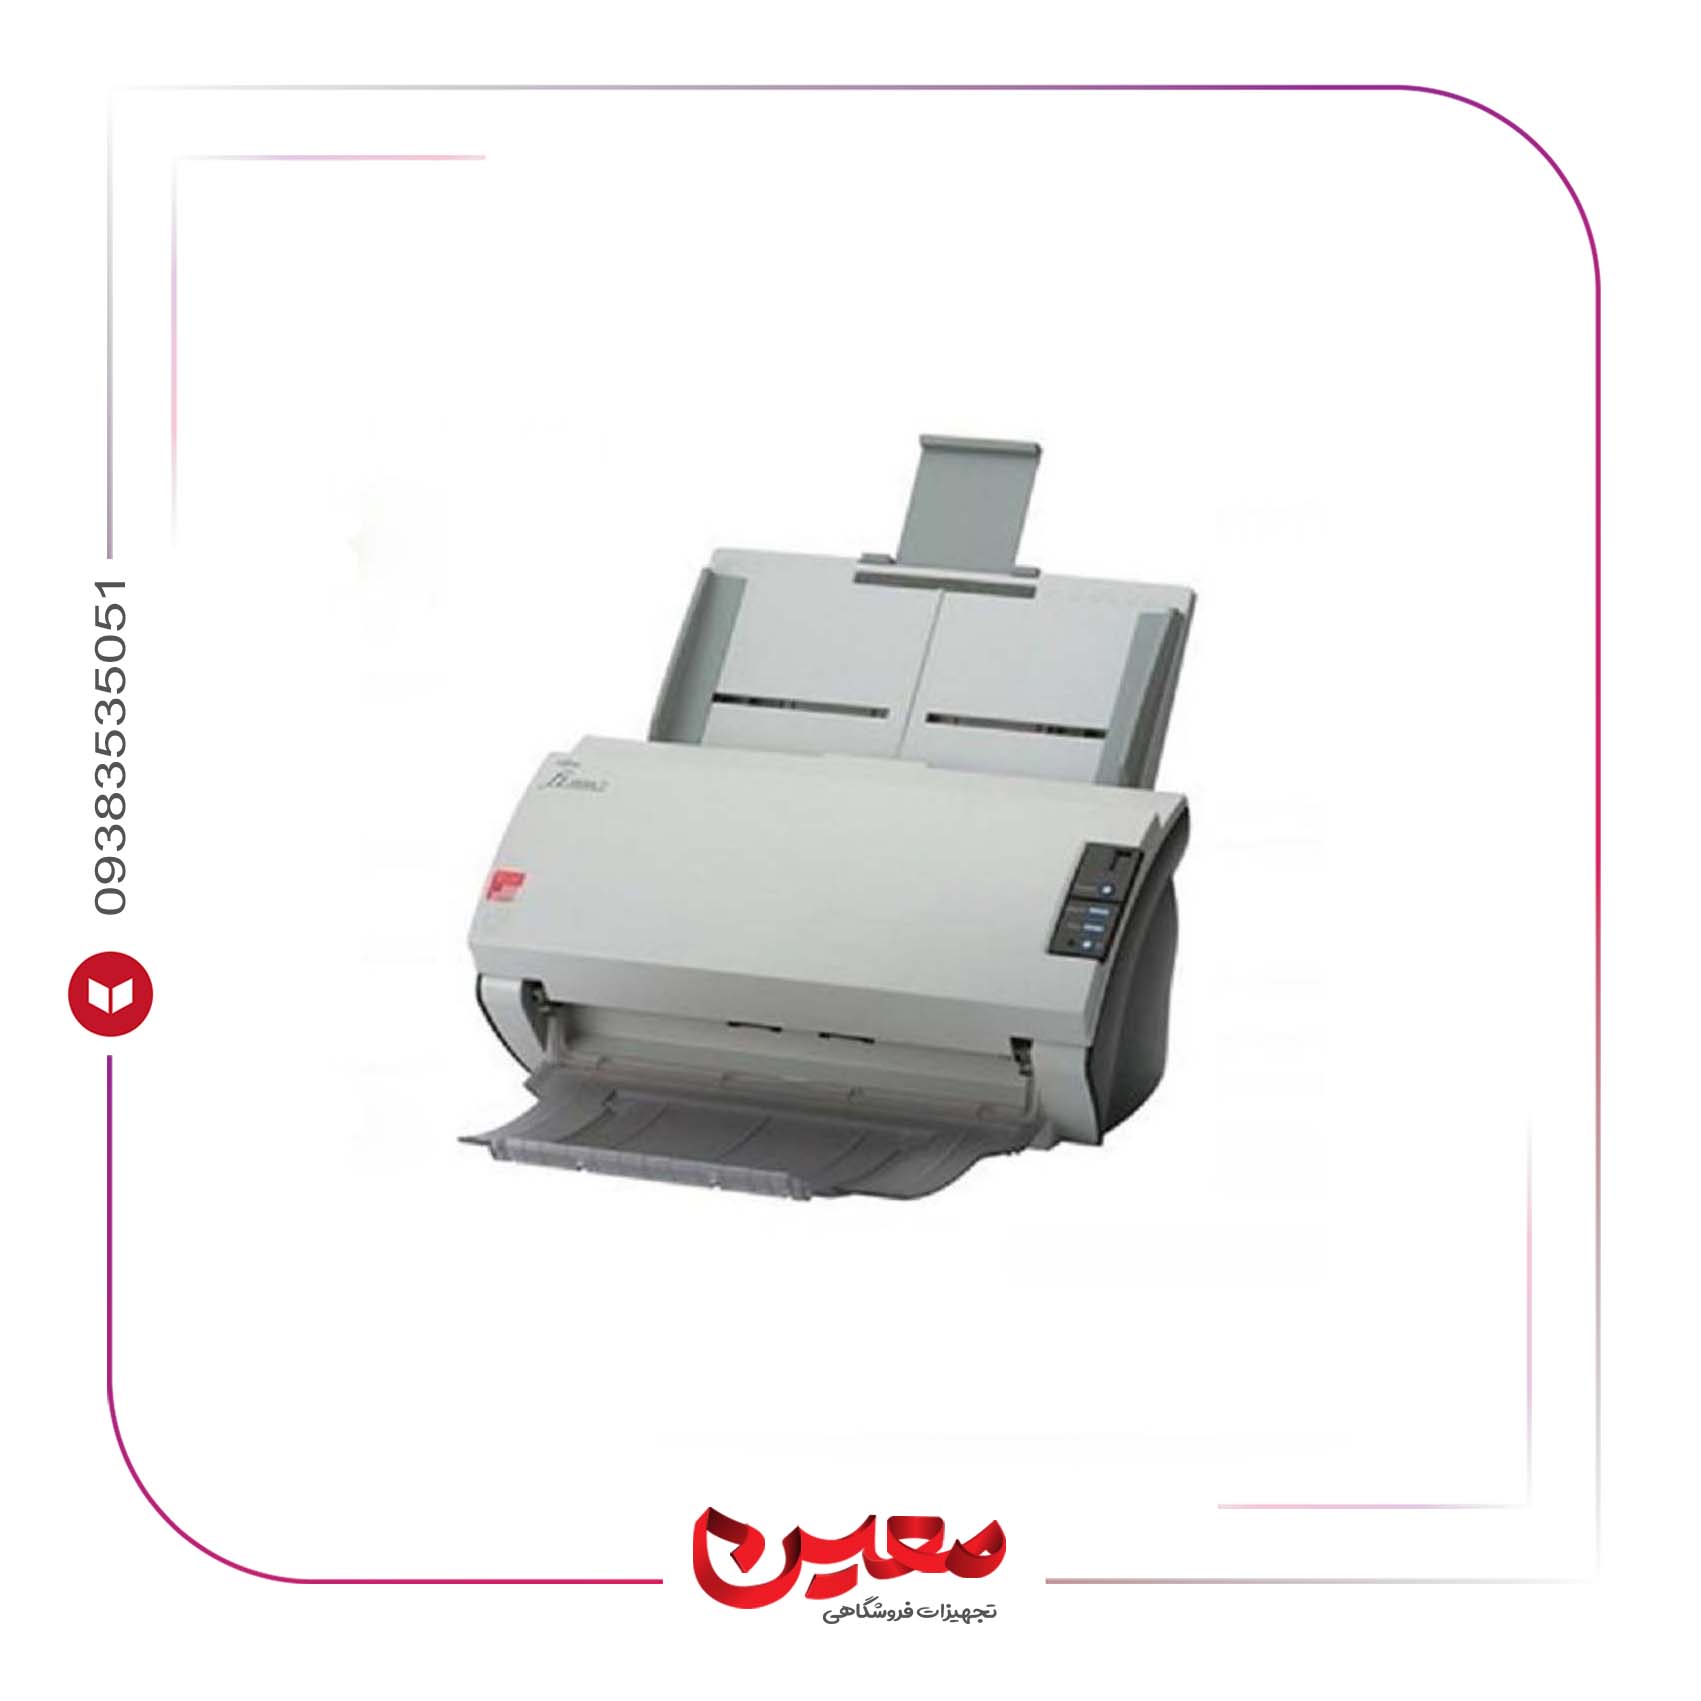 Fujitsu Fi-5530C2 scanner